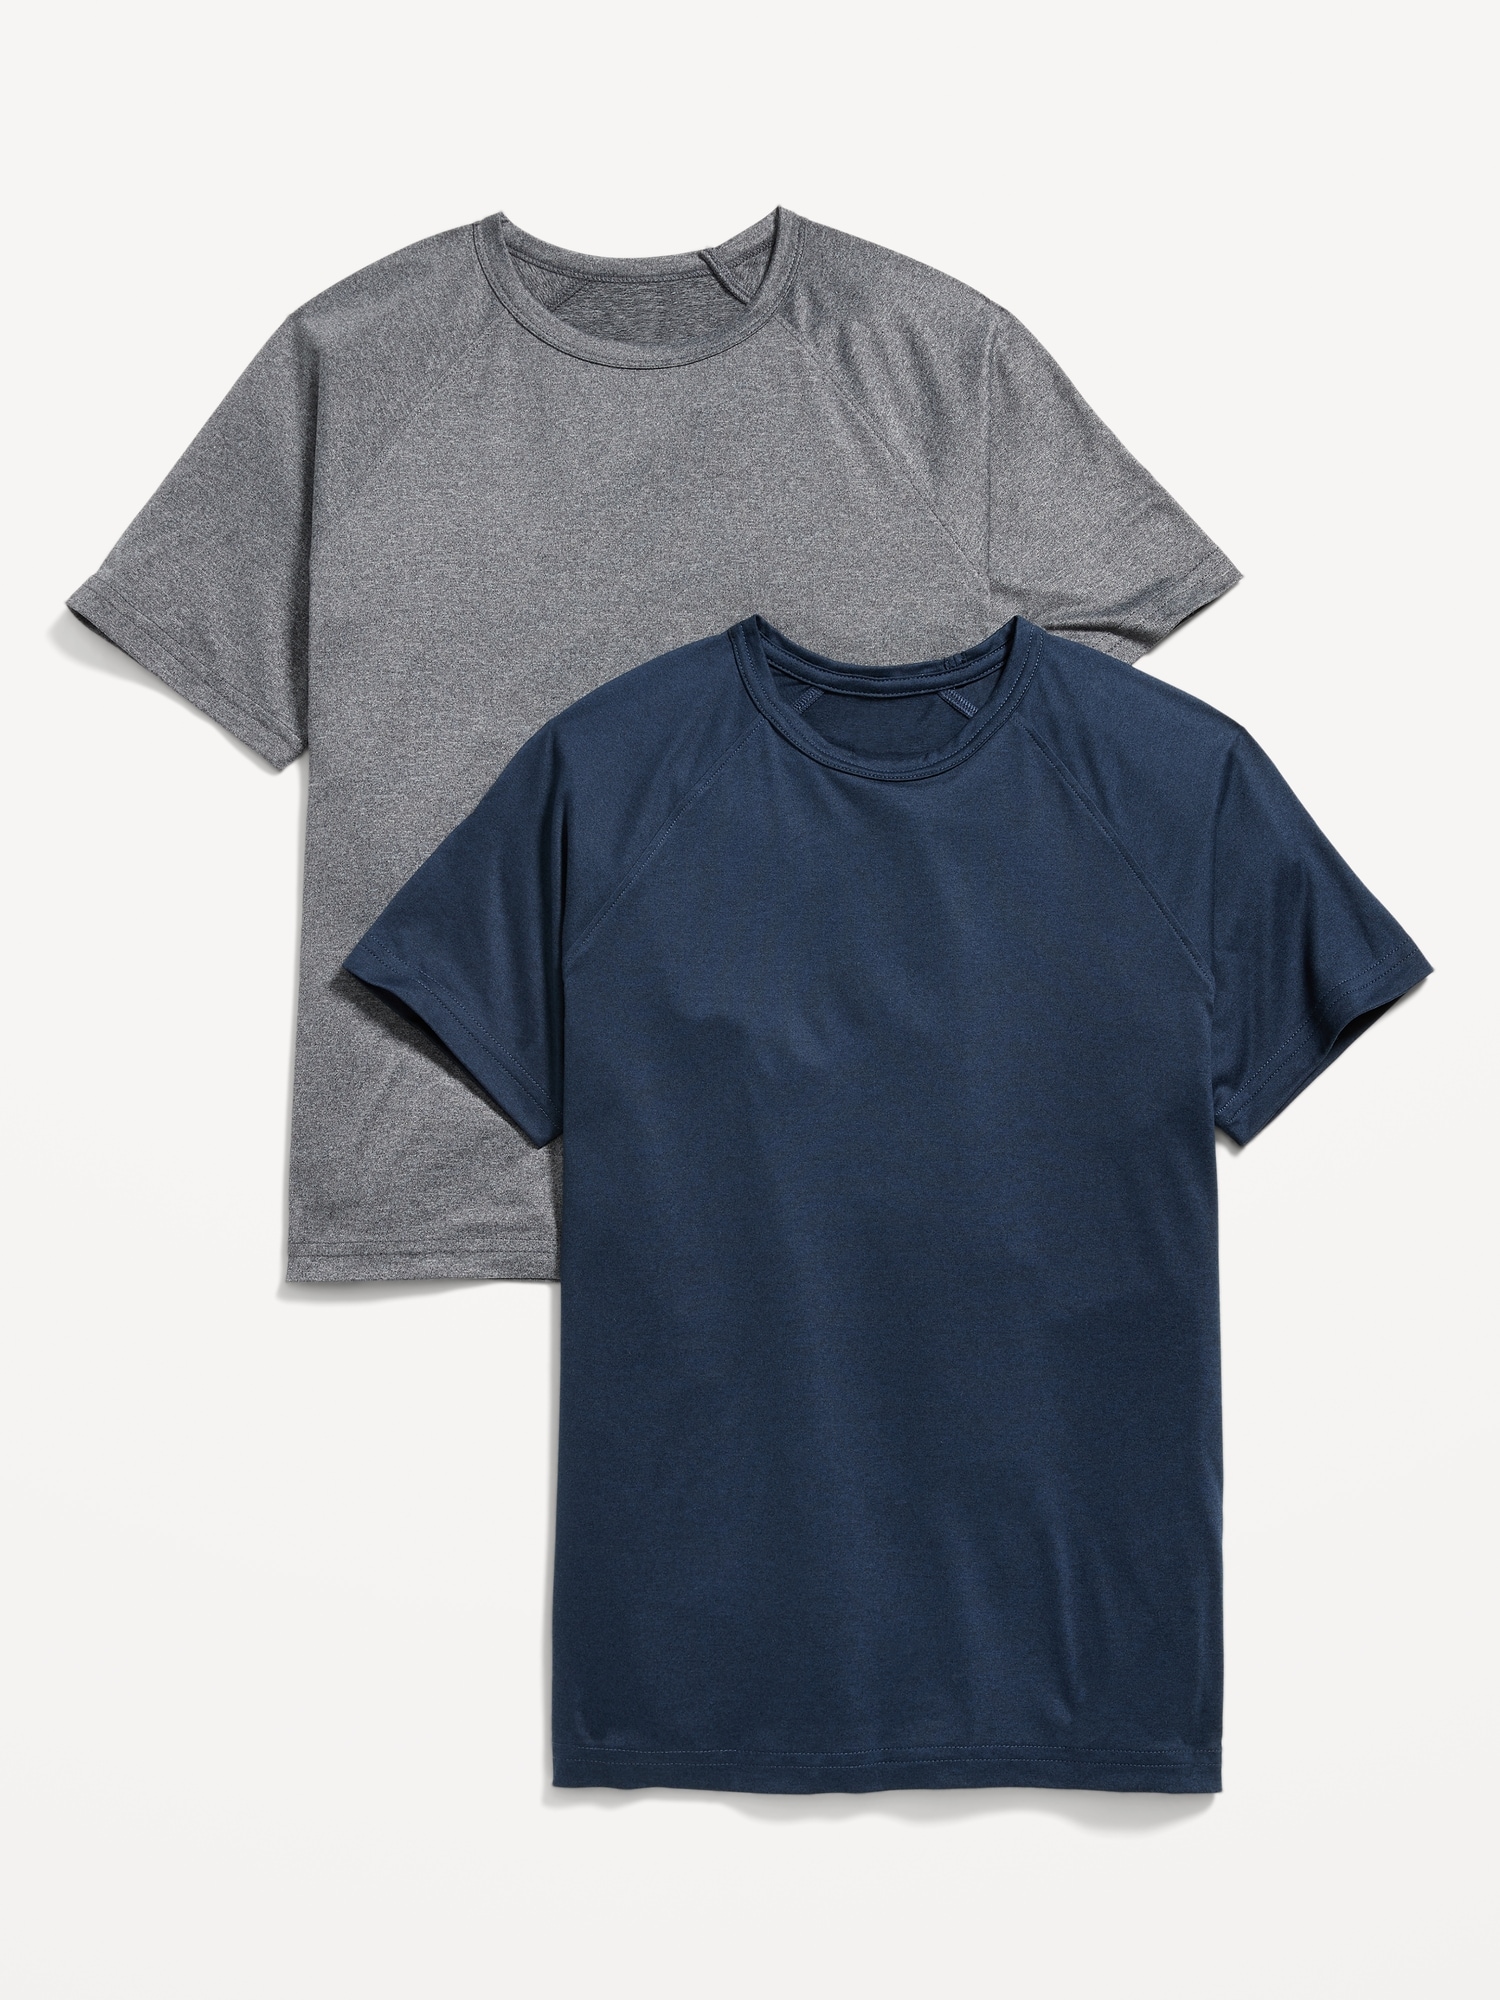 Old Navy Toronto Blue Jays Shirt Tees Boys S /p Regular 6 - 7 Team Atletics  MLB for sale online